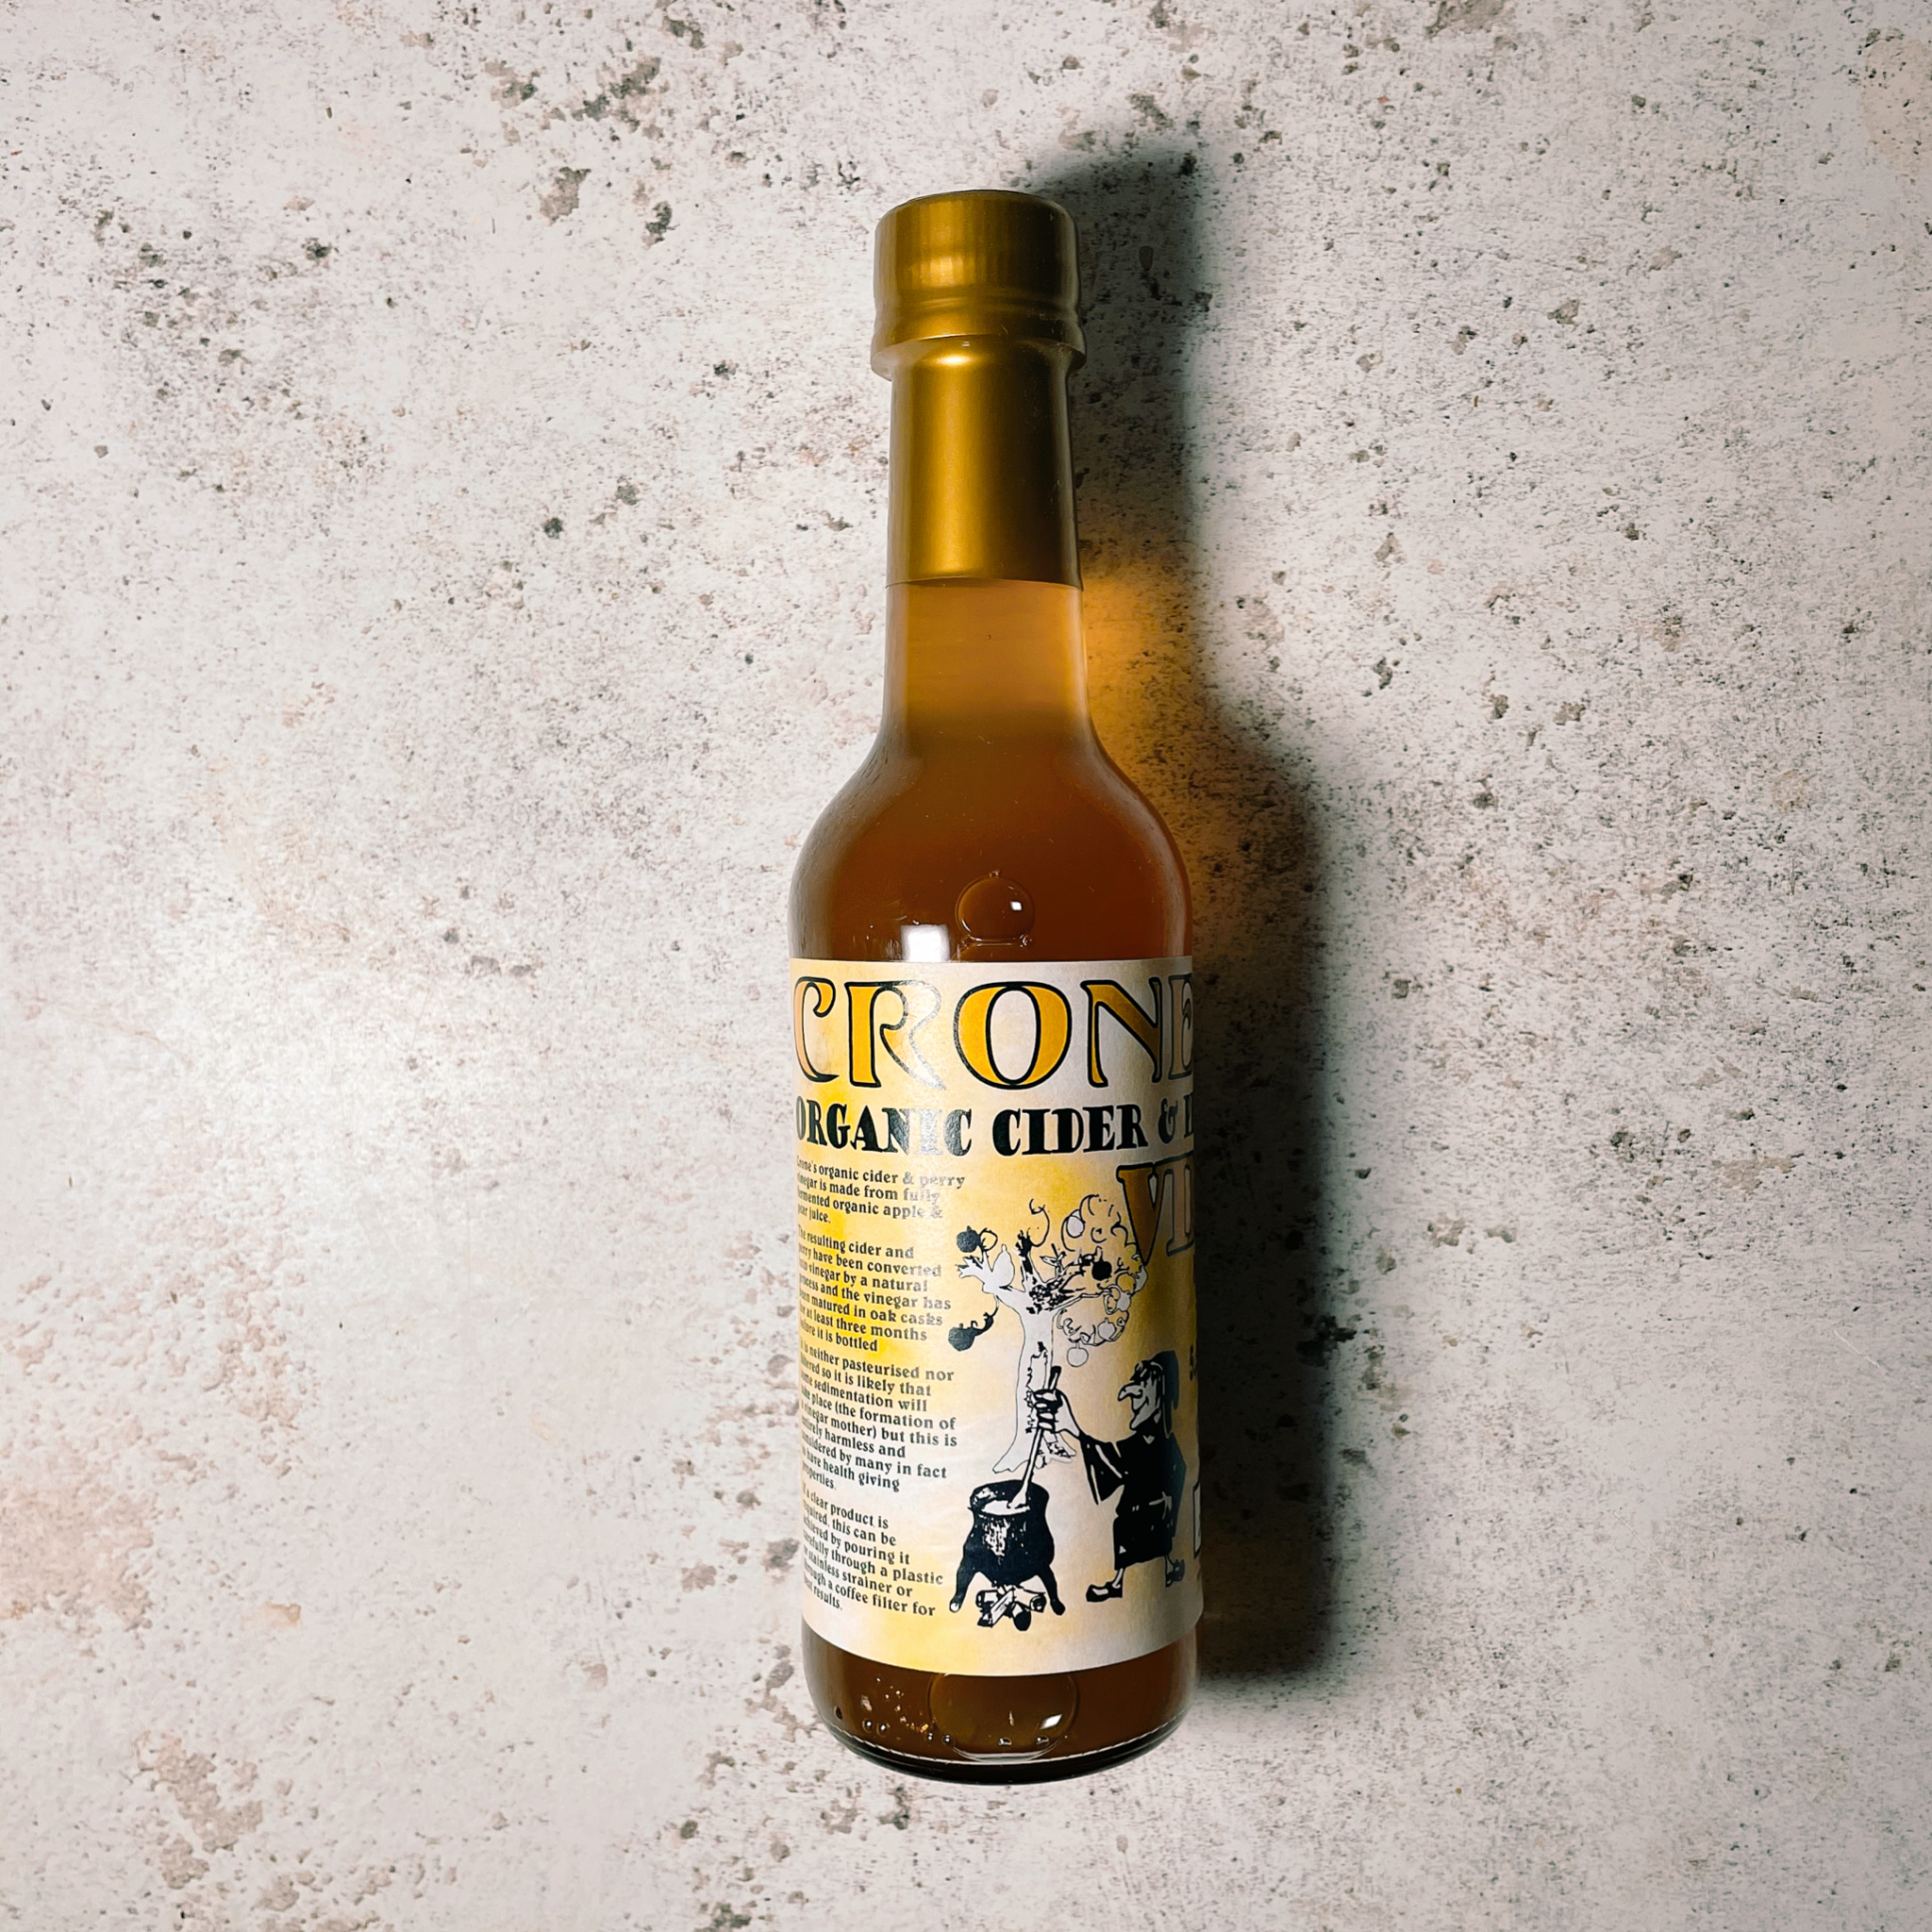 Crone’s Organic Cider & Perry Vinegar